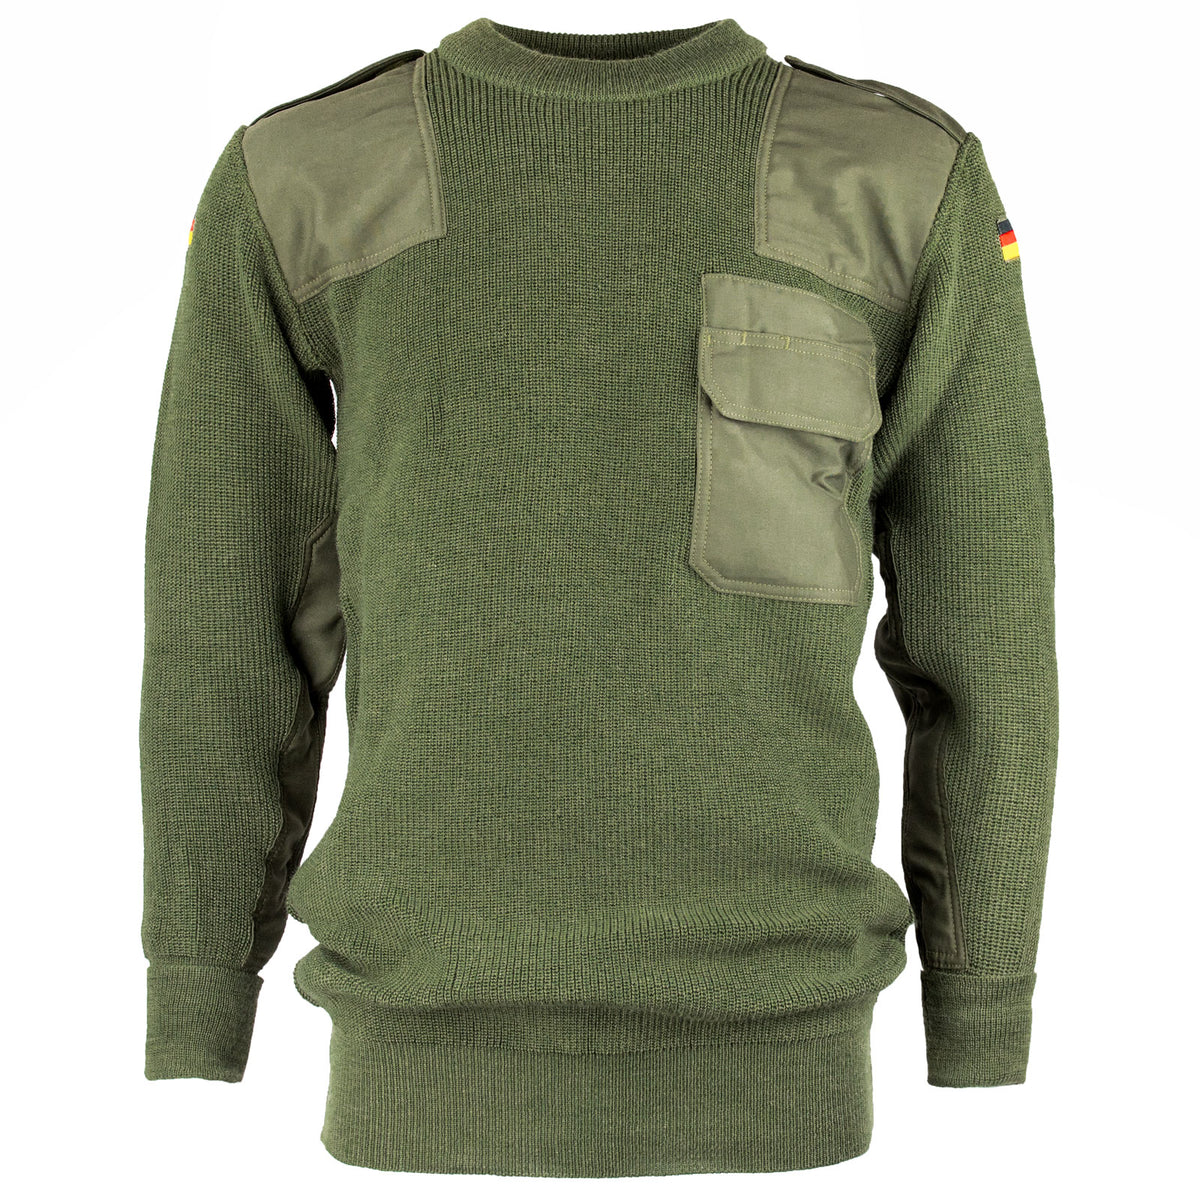 Wool German Army Commando Sweater